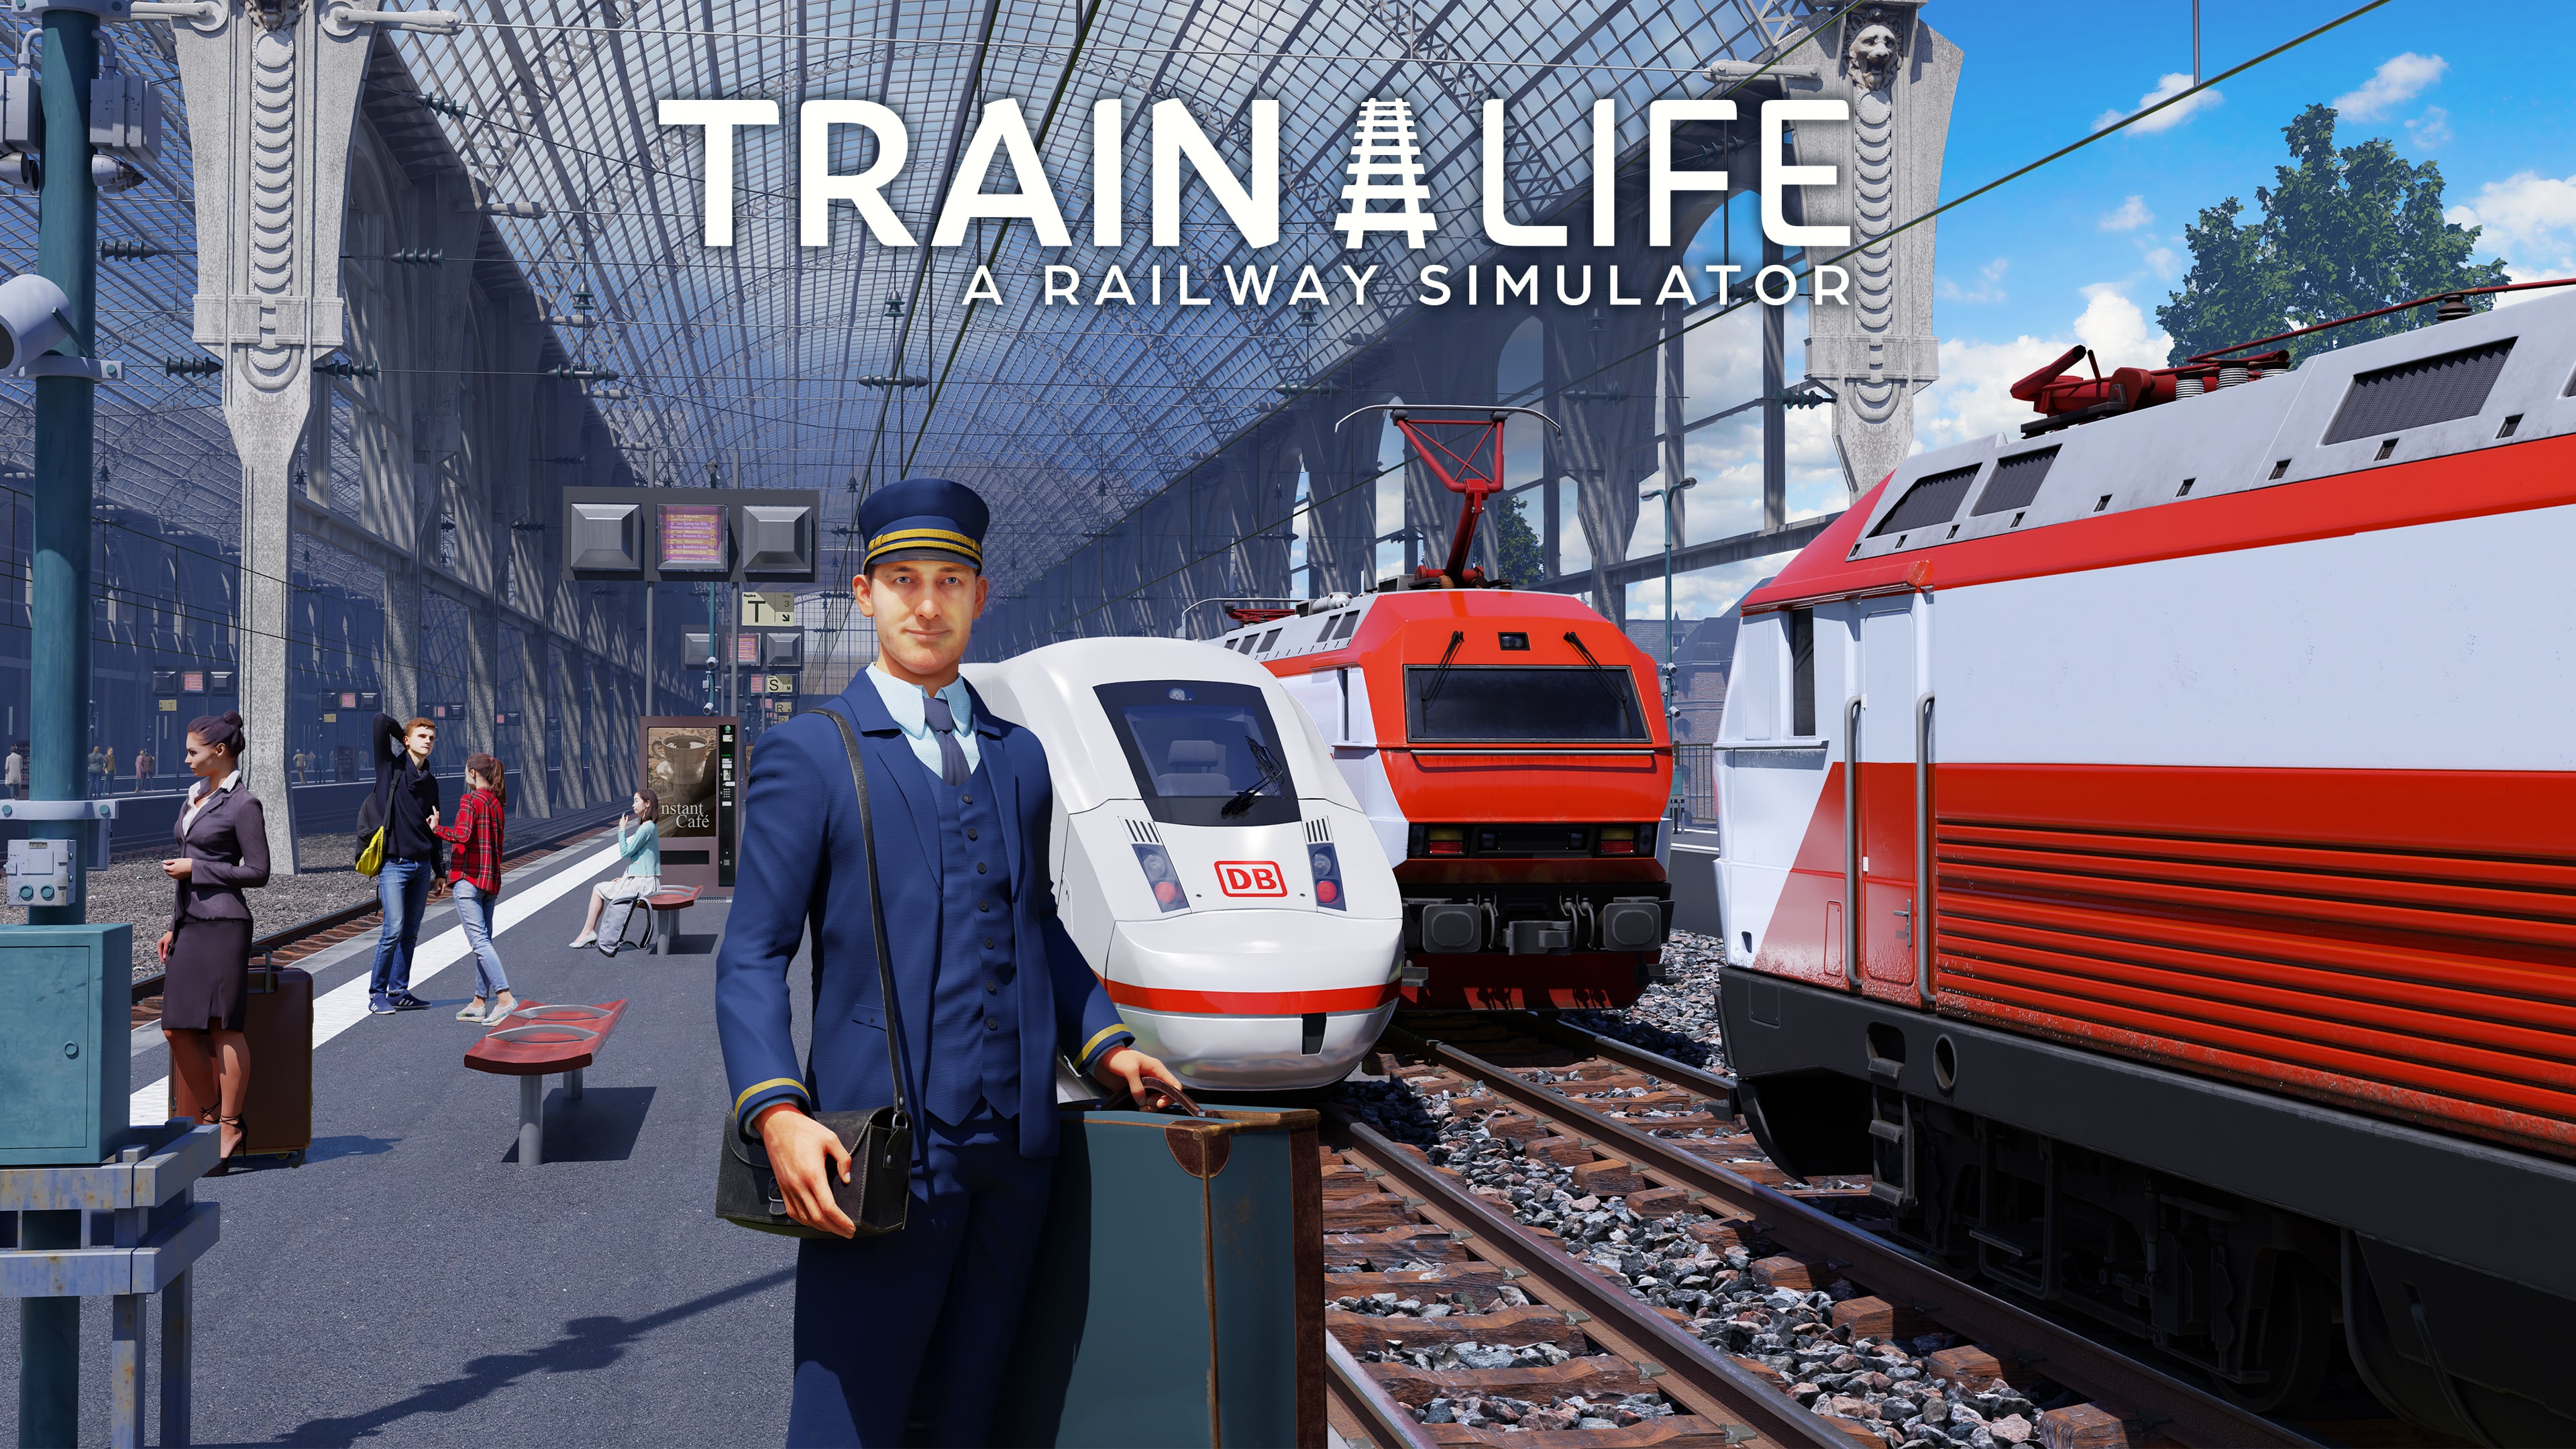 Train Life - A Railway Simulator (Simplified Chinese, English, Korean, Japanese, Traditional Chinese)